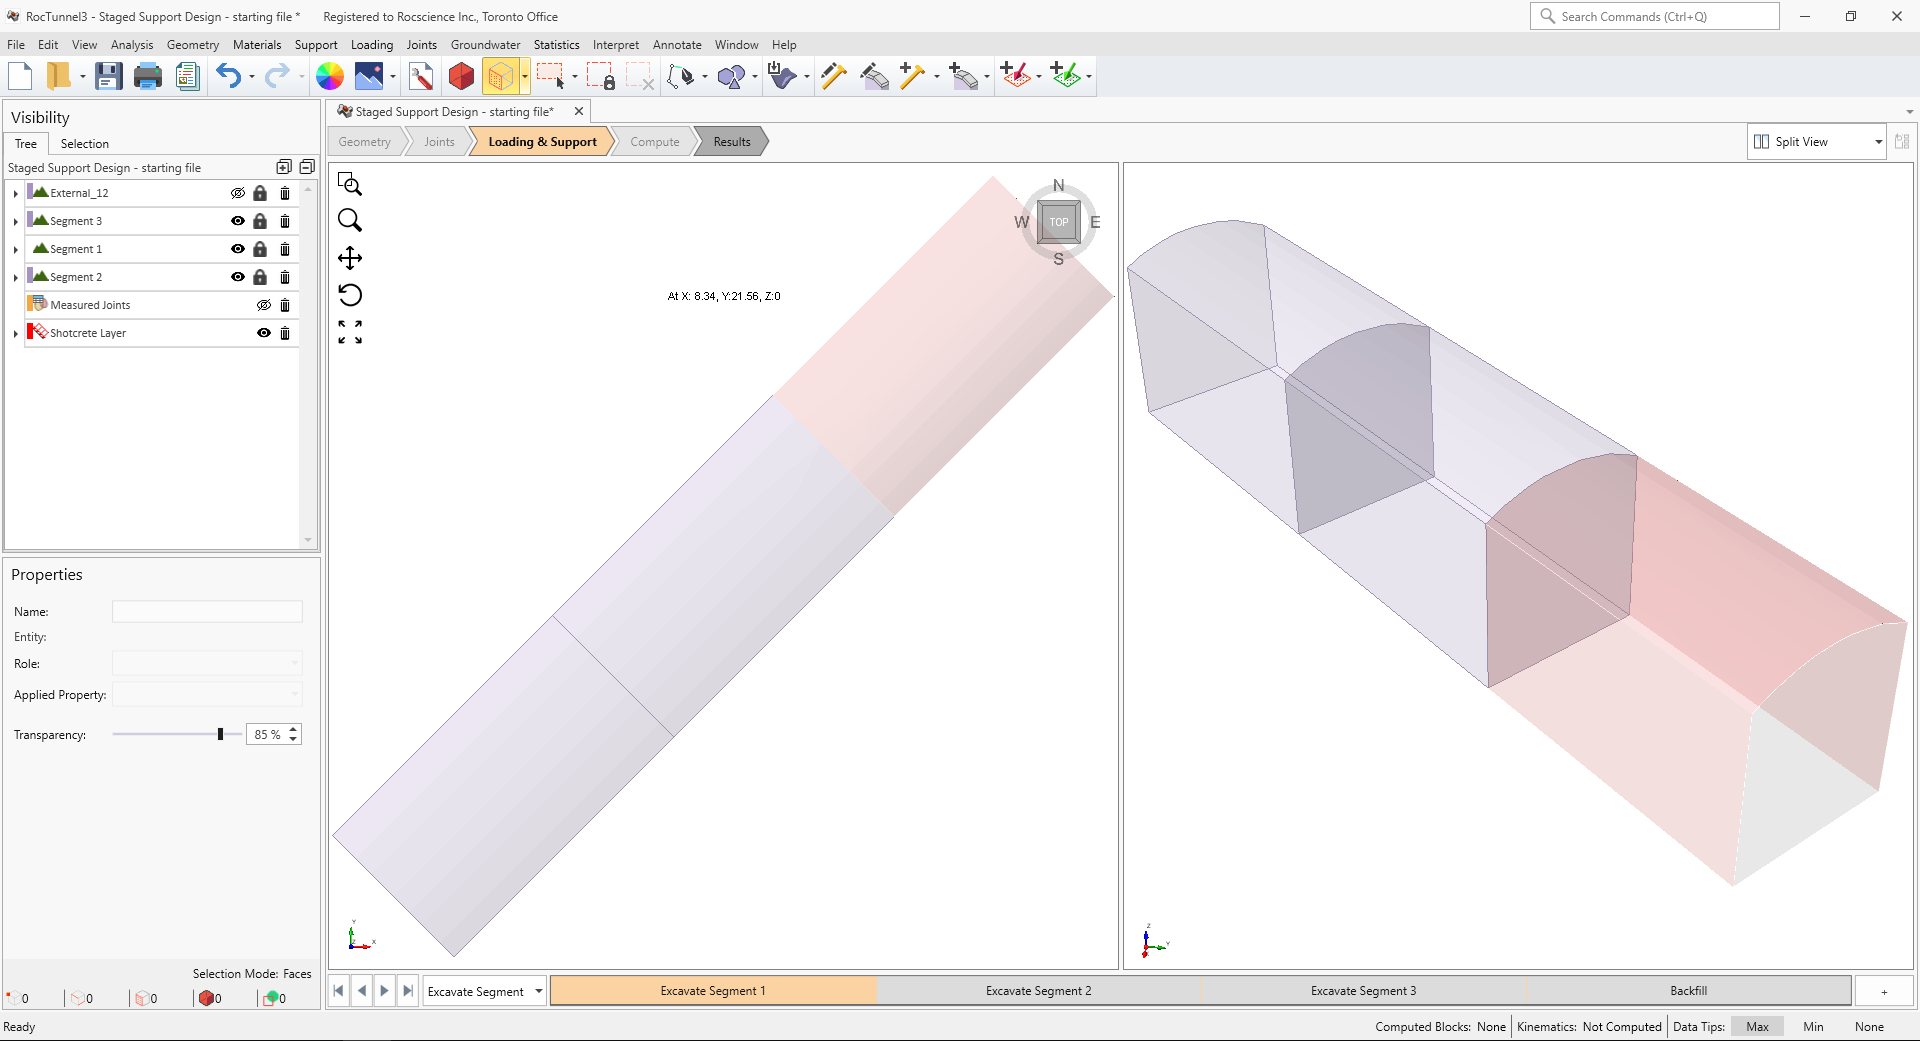 3D CAD View of shotcrete layer added to Segment 1 in Excavate Segment 1 stage